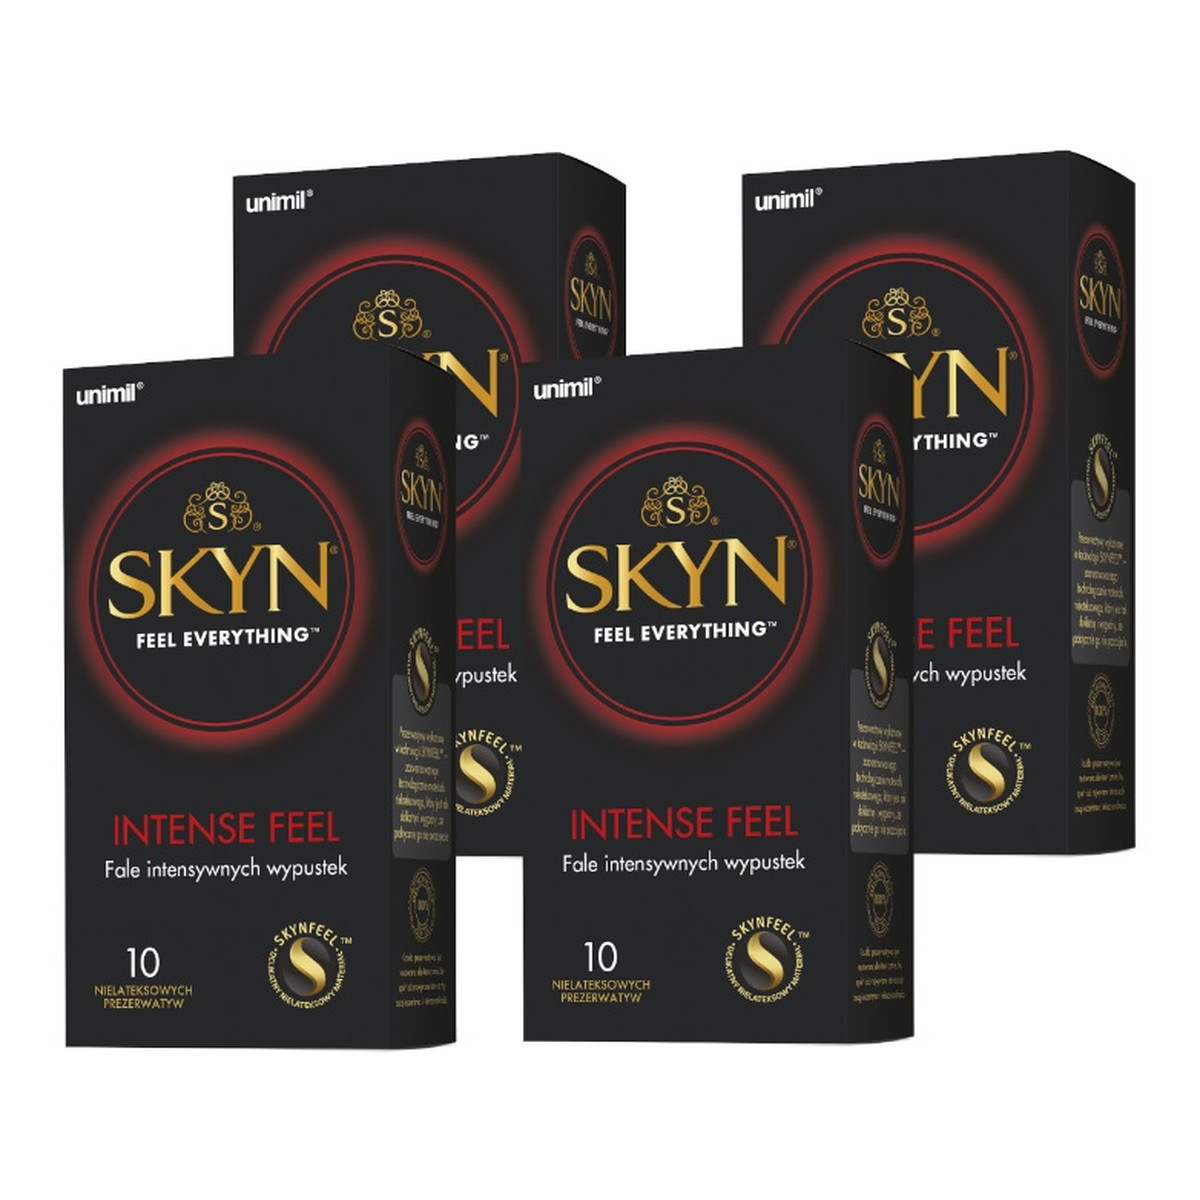 Unimil Skyn Intense Feel nielateksowe prezerwatywy 40szt